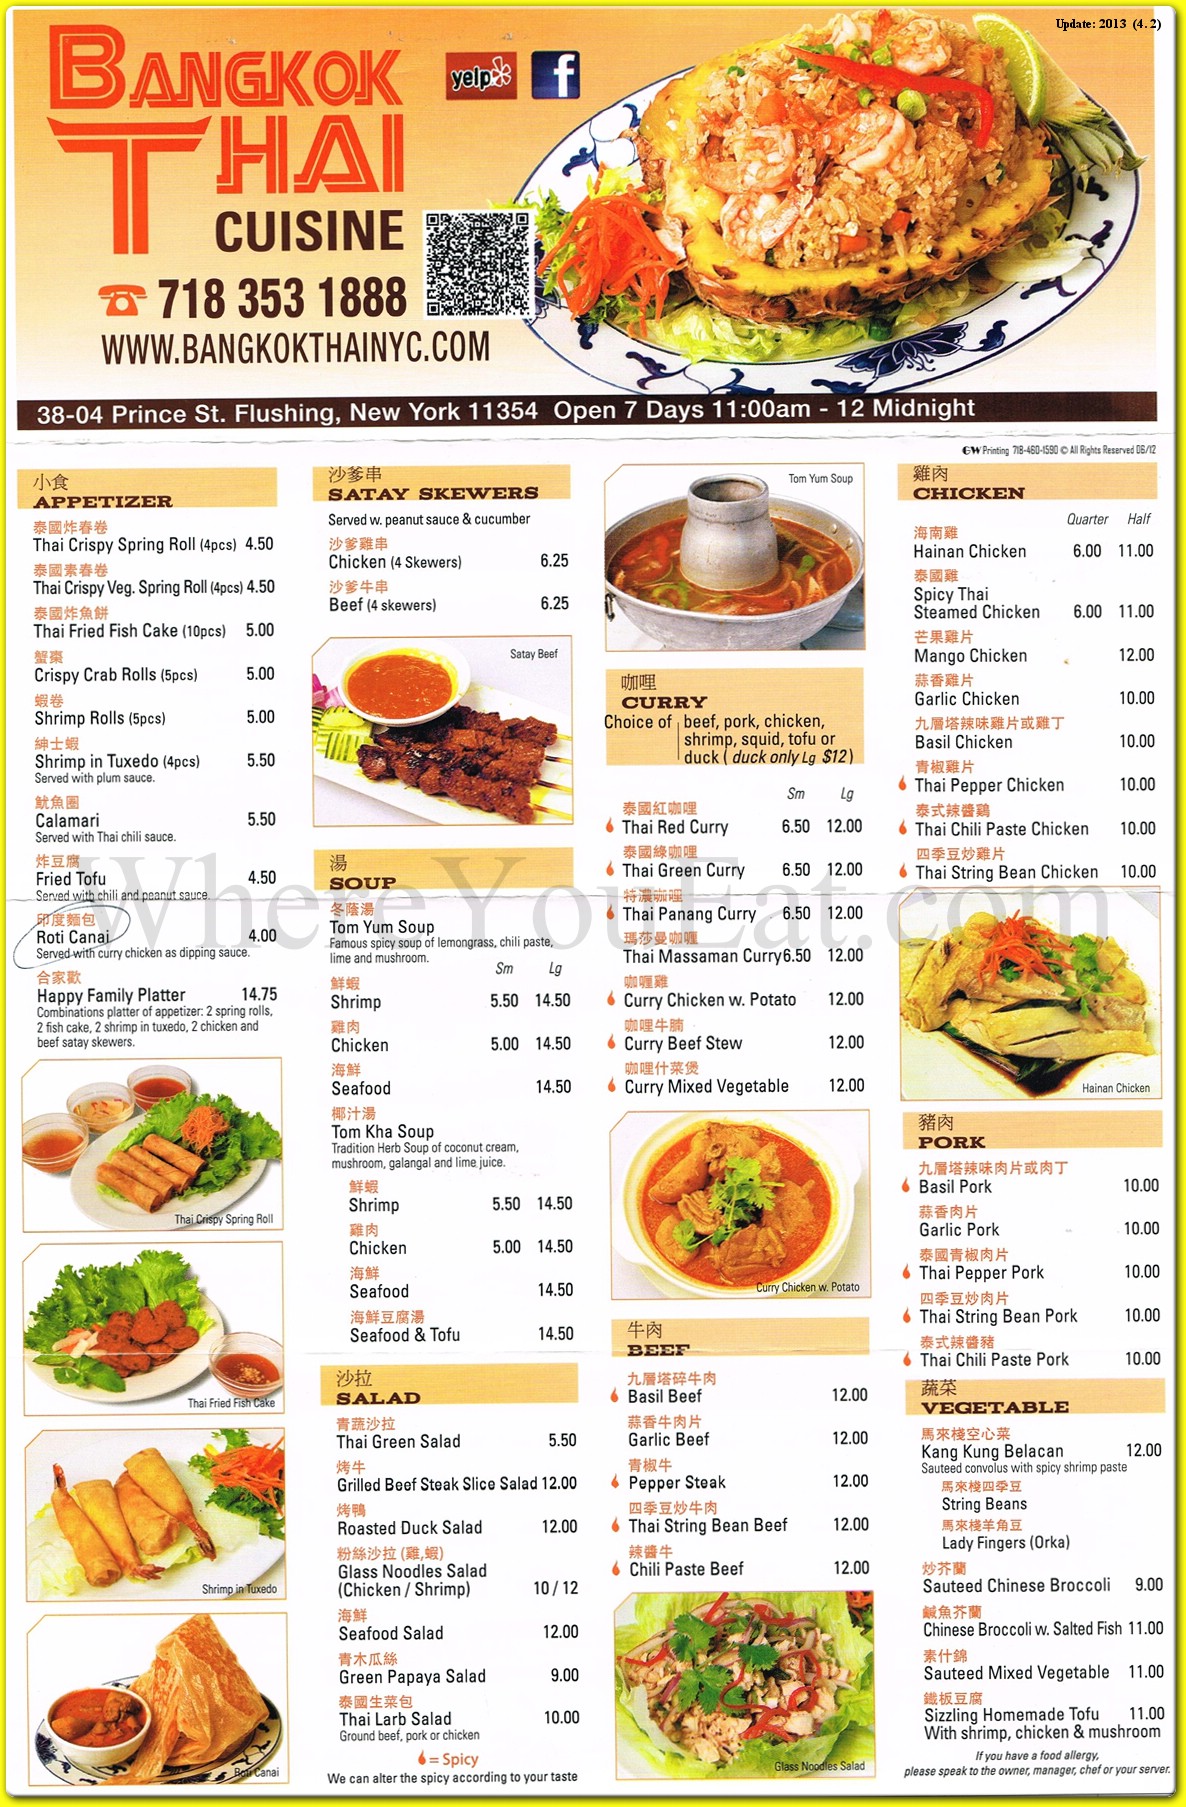 Bangkok Thai Restaurant in Queens / Official Menus & Photos